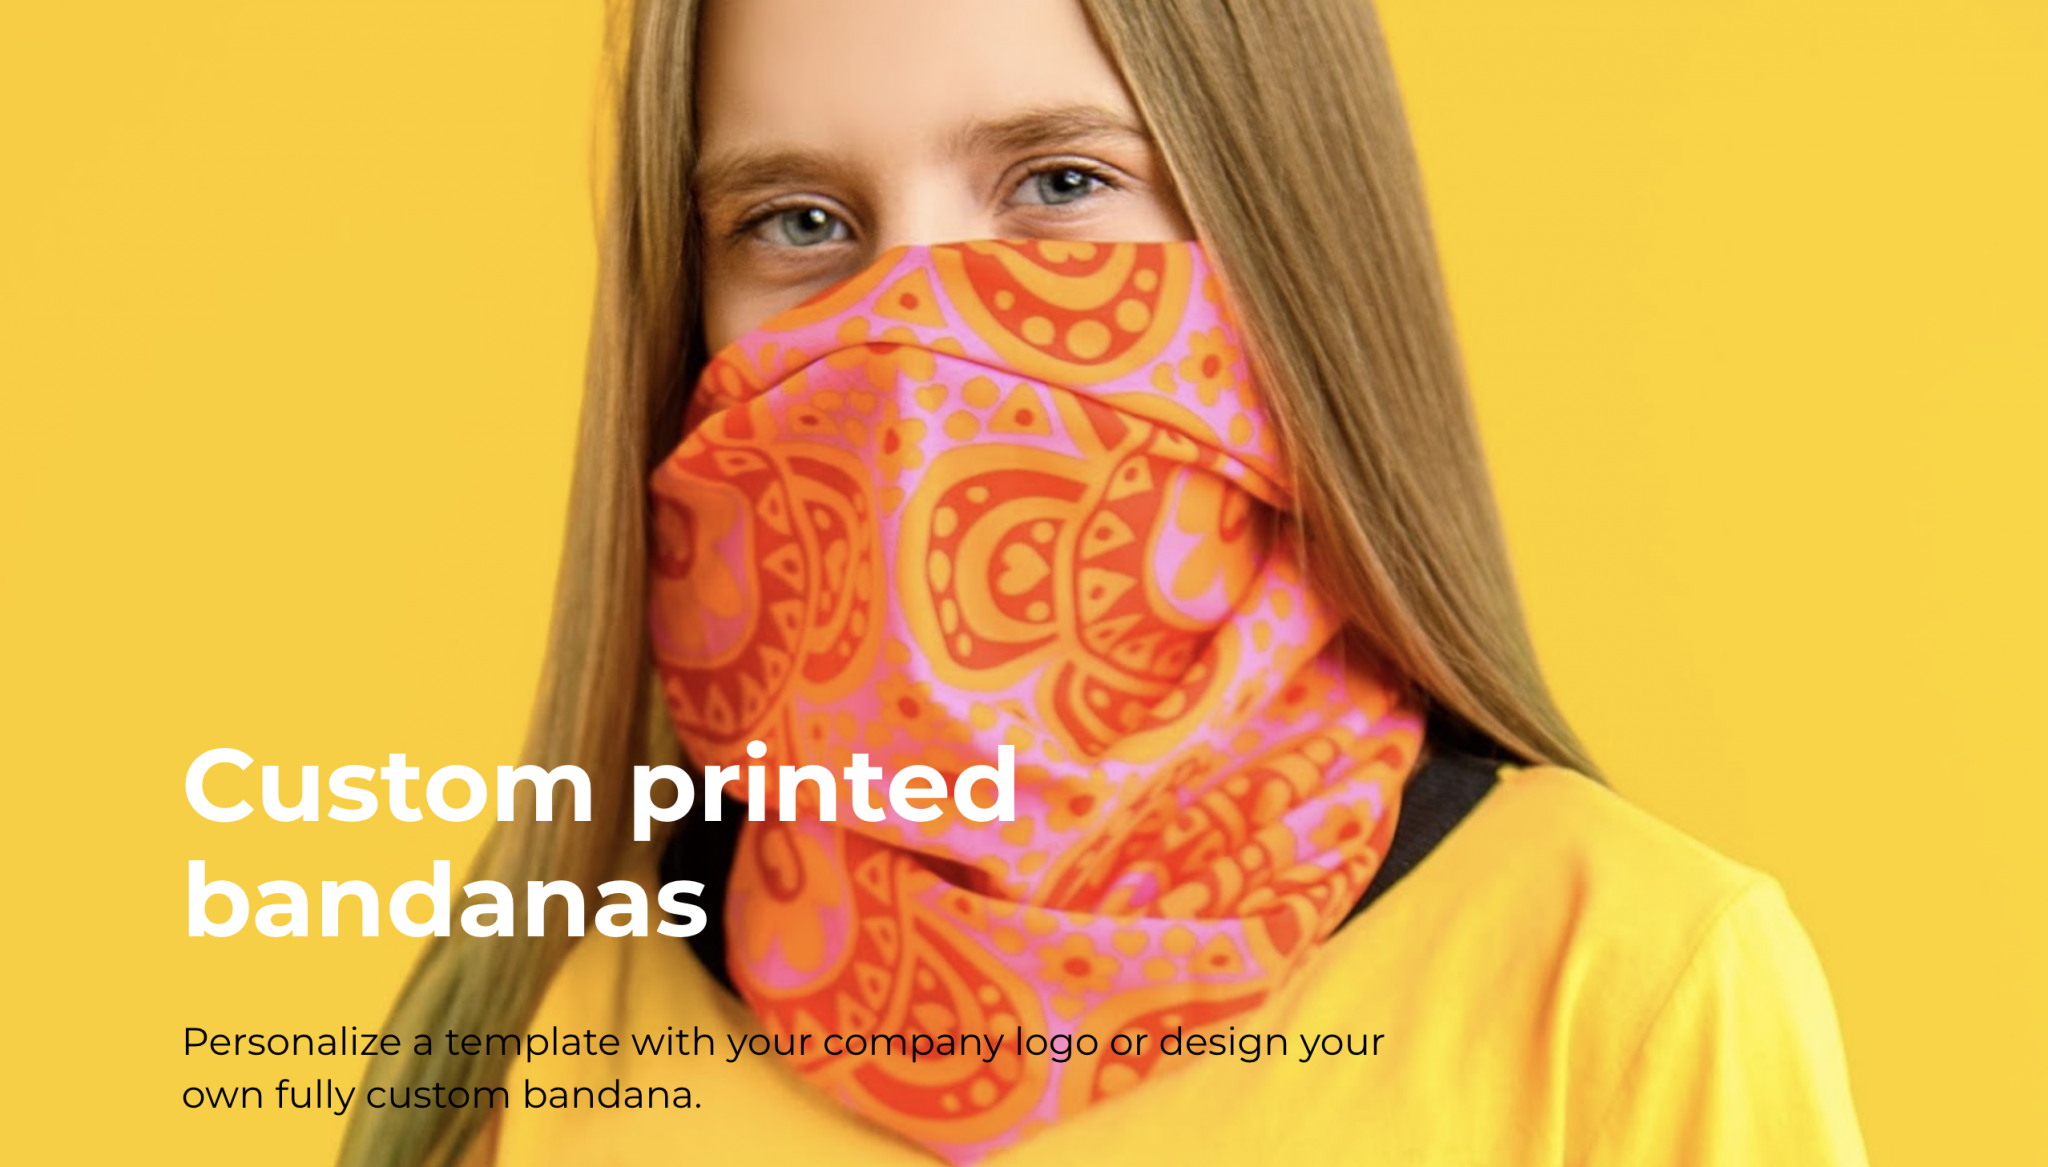 joy custom bandanas, custom printed bandanas, custom logo bandanas, promotional product trends 2020 during covid coronavirus